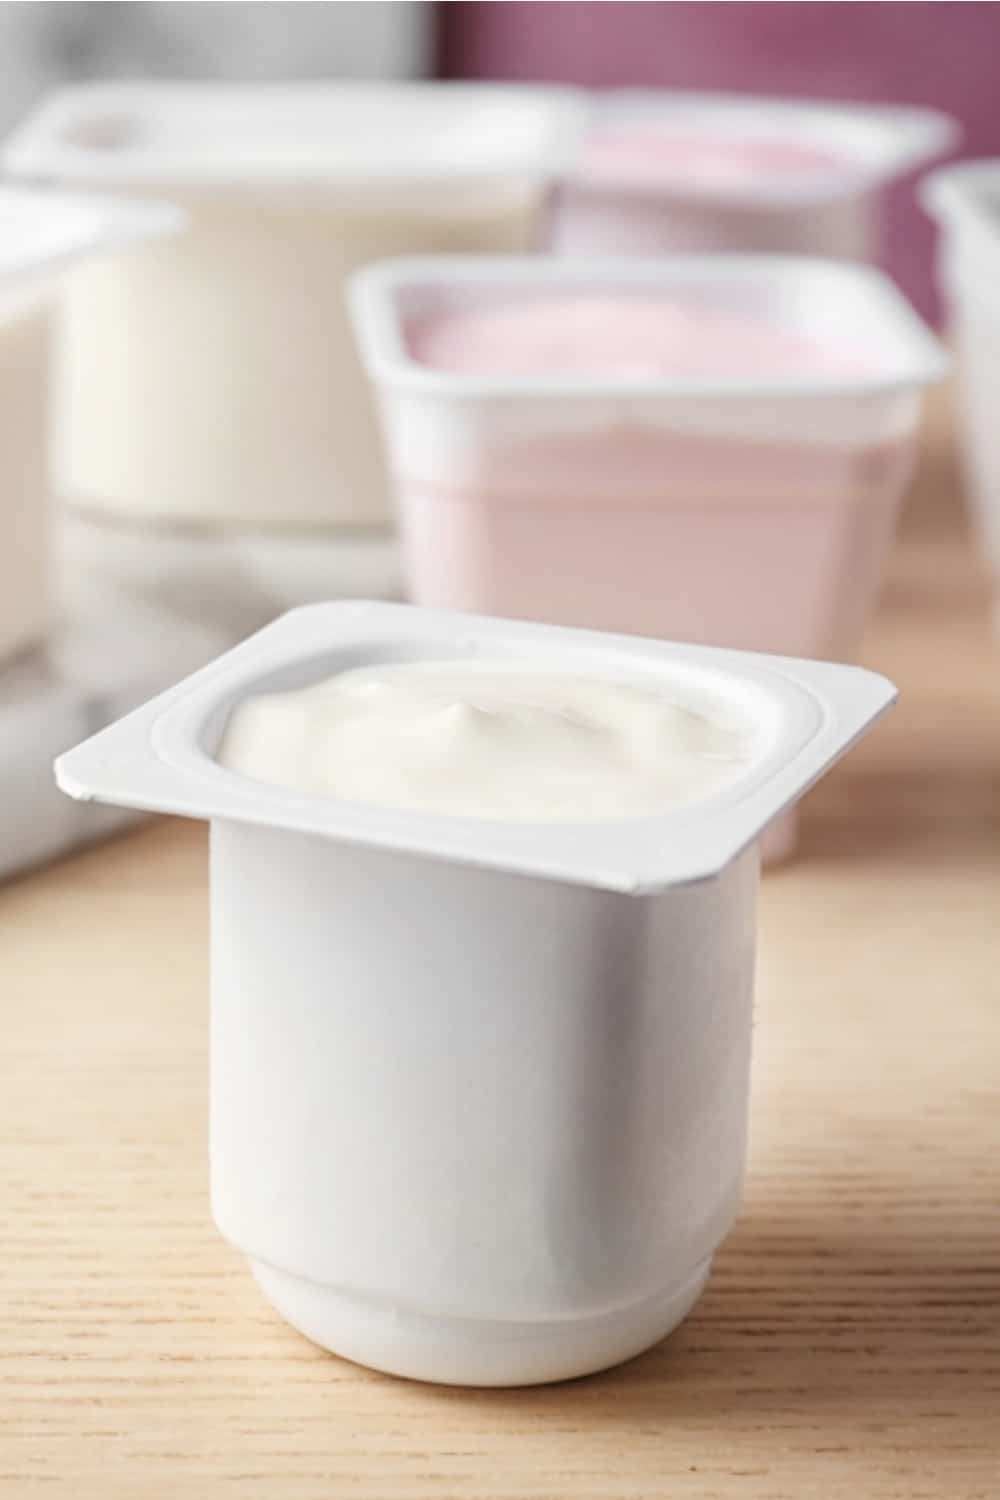 yogurt in plastic cups